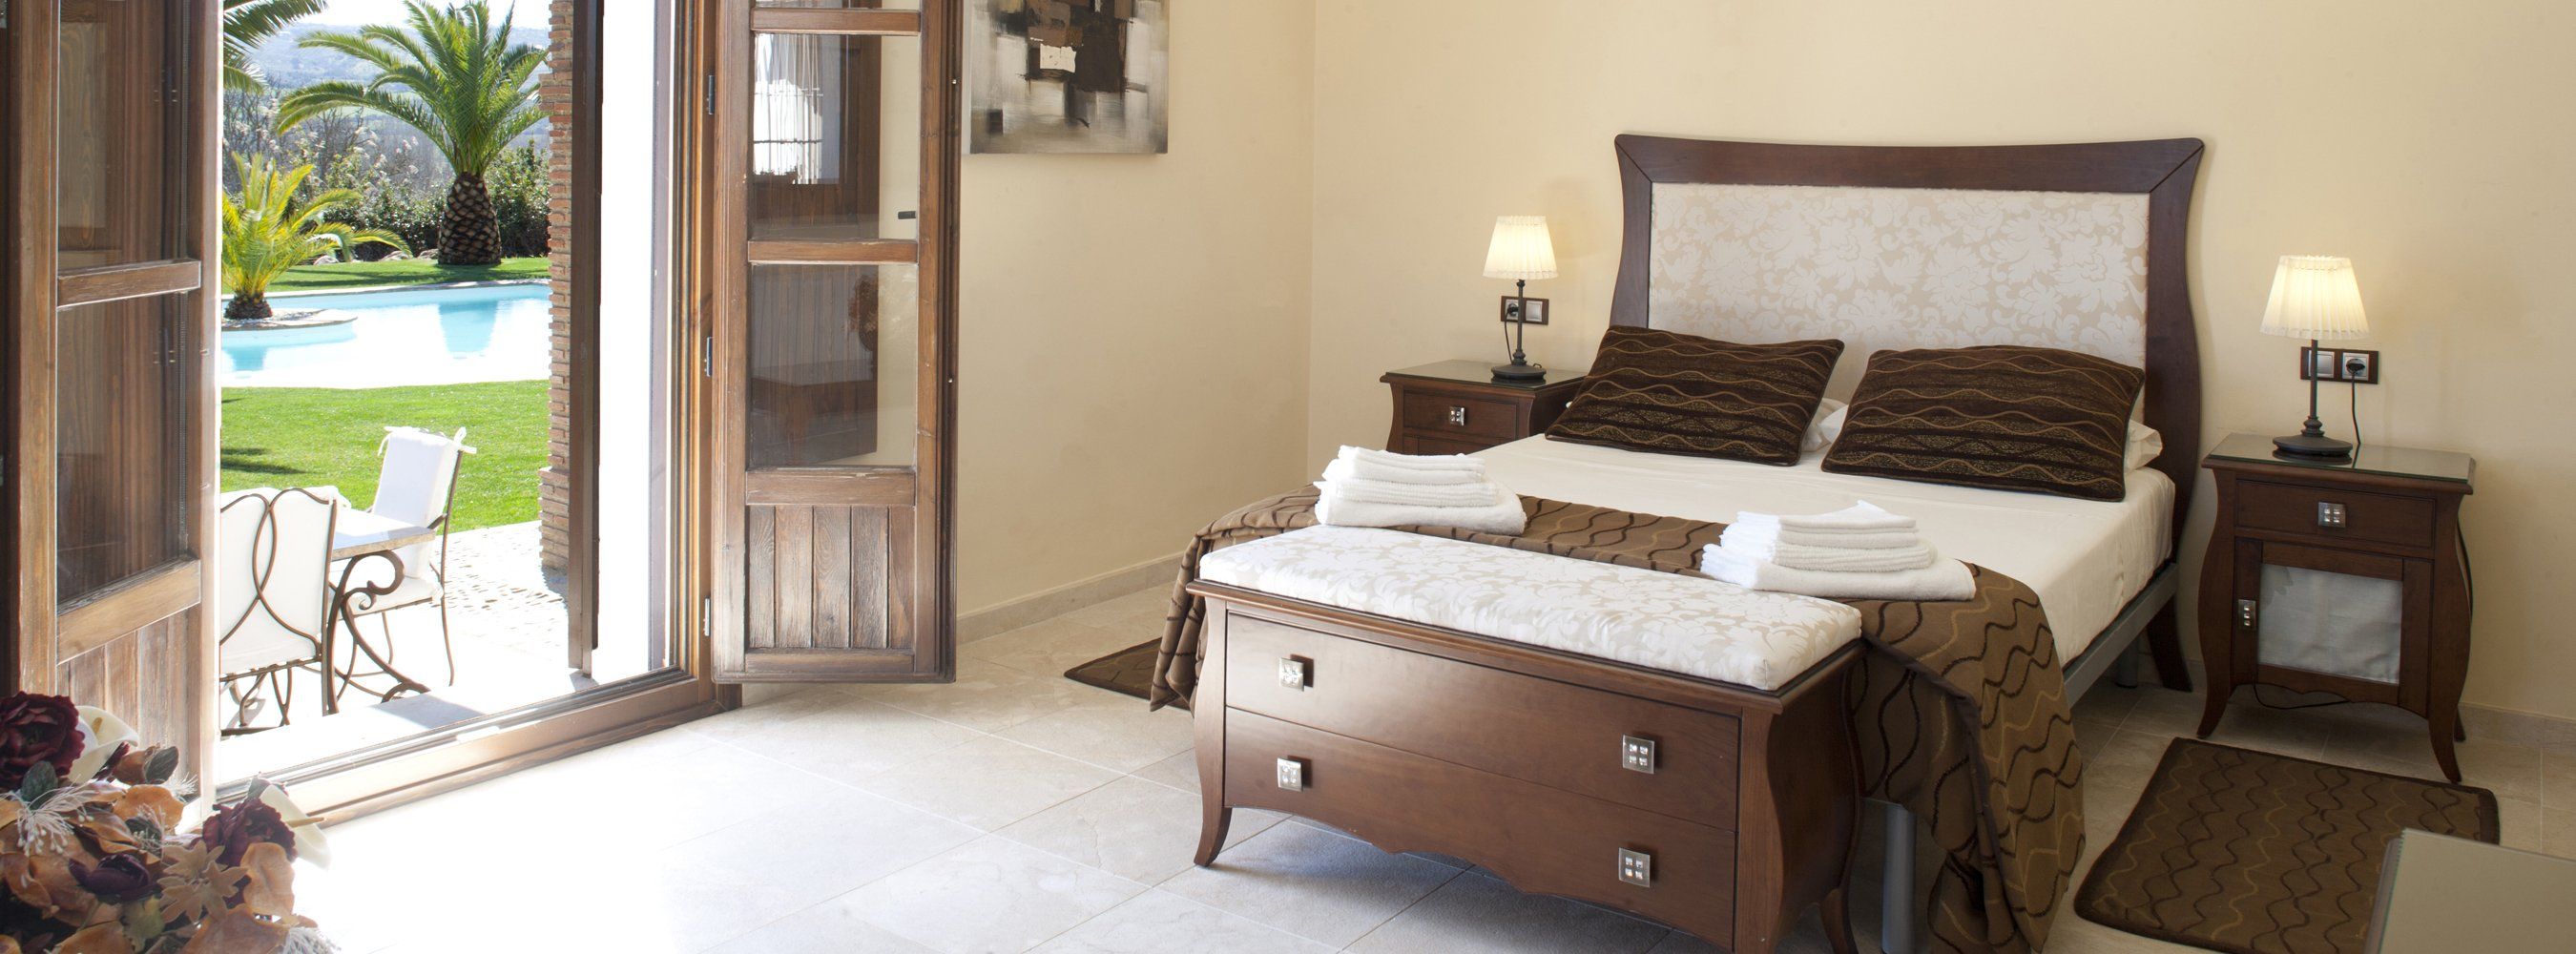 bedroom luxury villa ronda